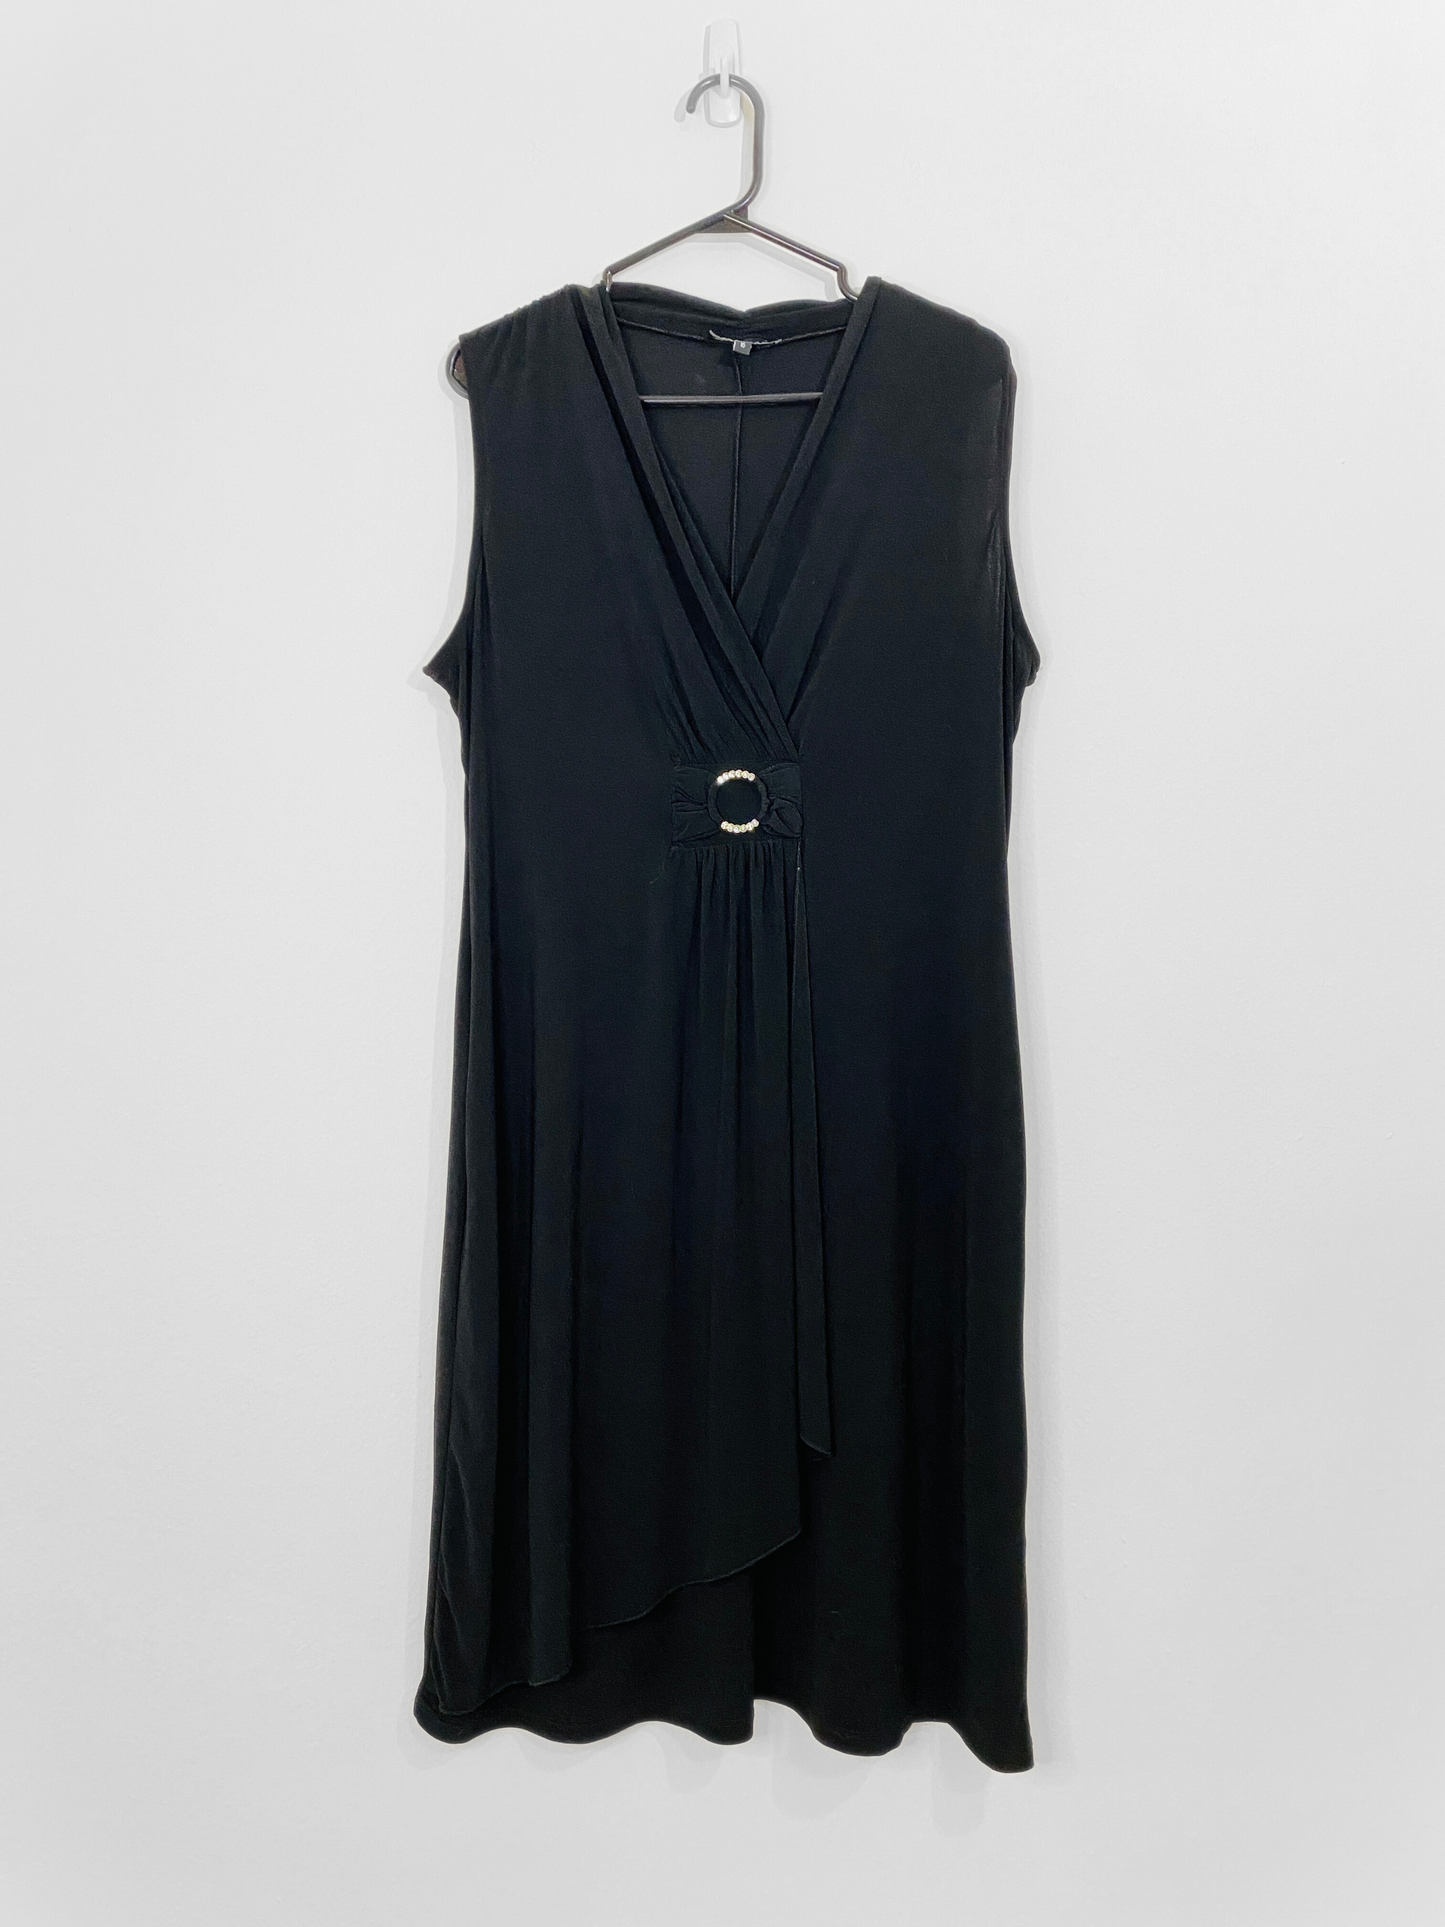 Black Ruched Dress (Size 16)